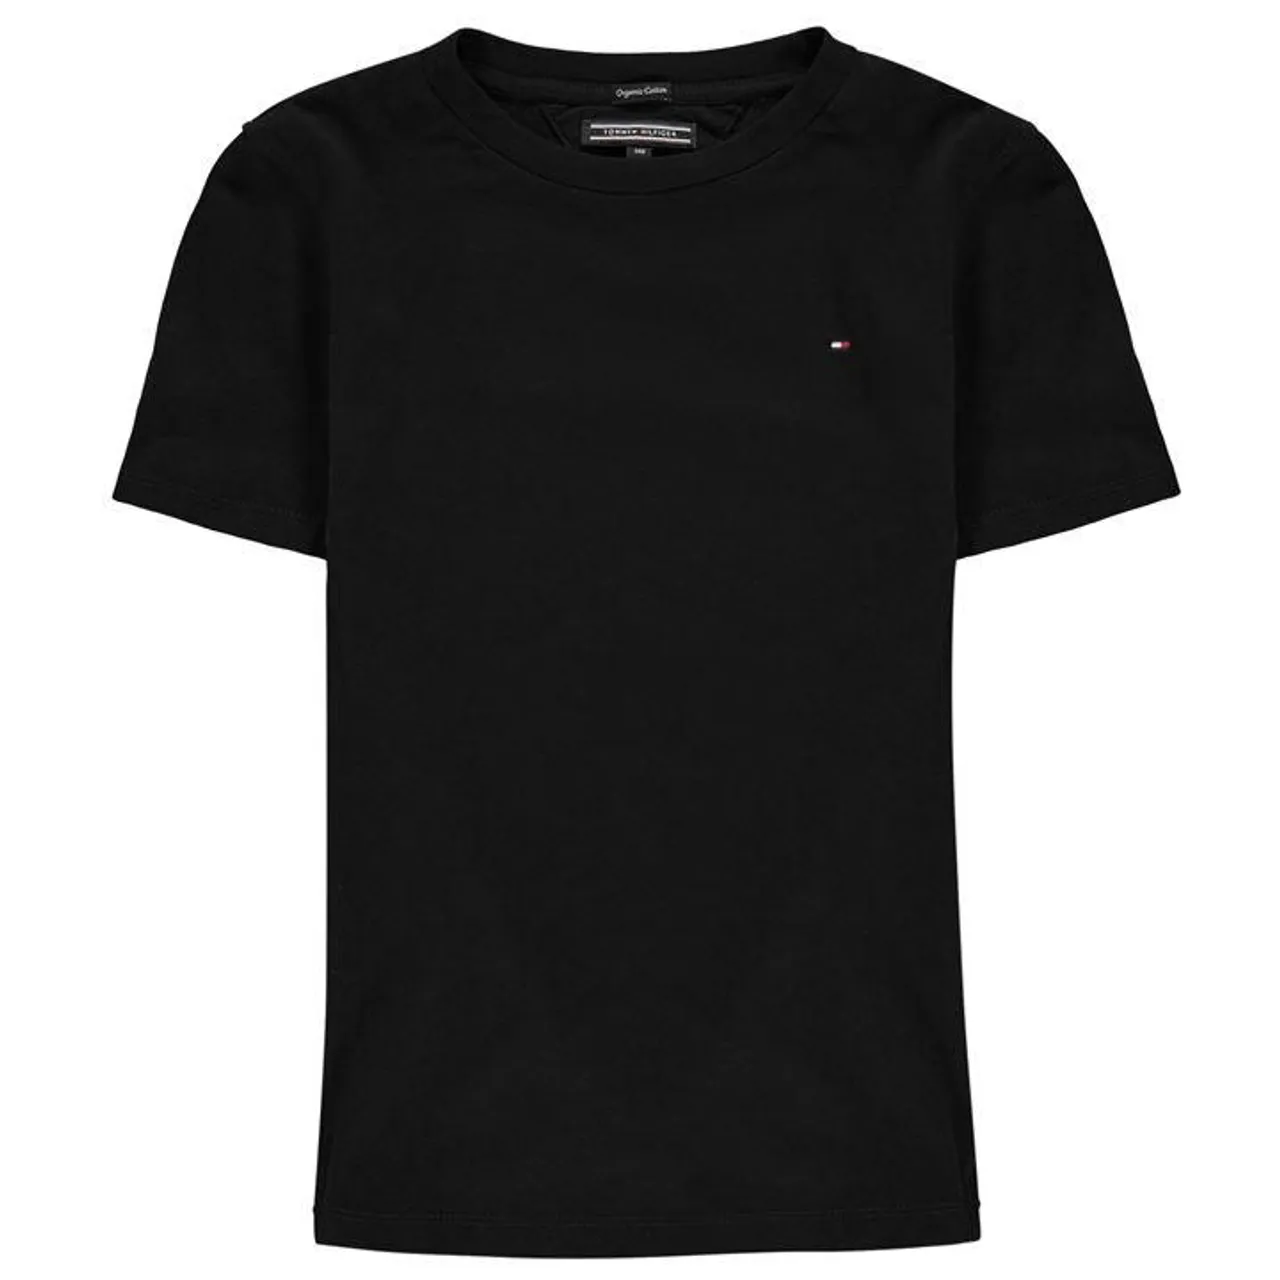 Tommy Hilfiger Children's Original T Shirt - Black